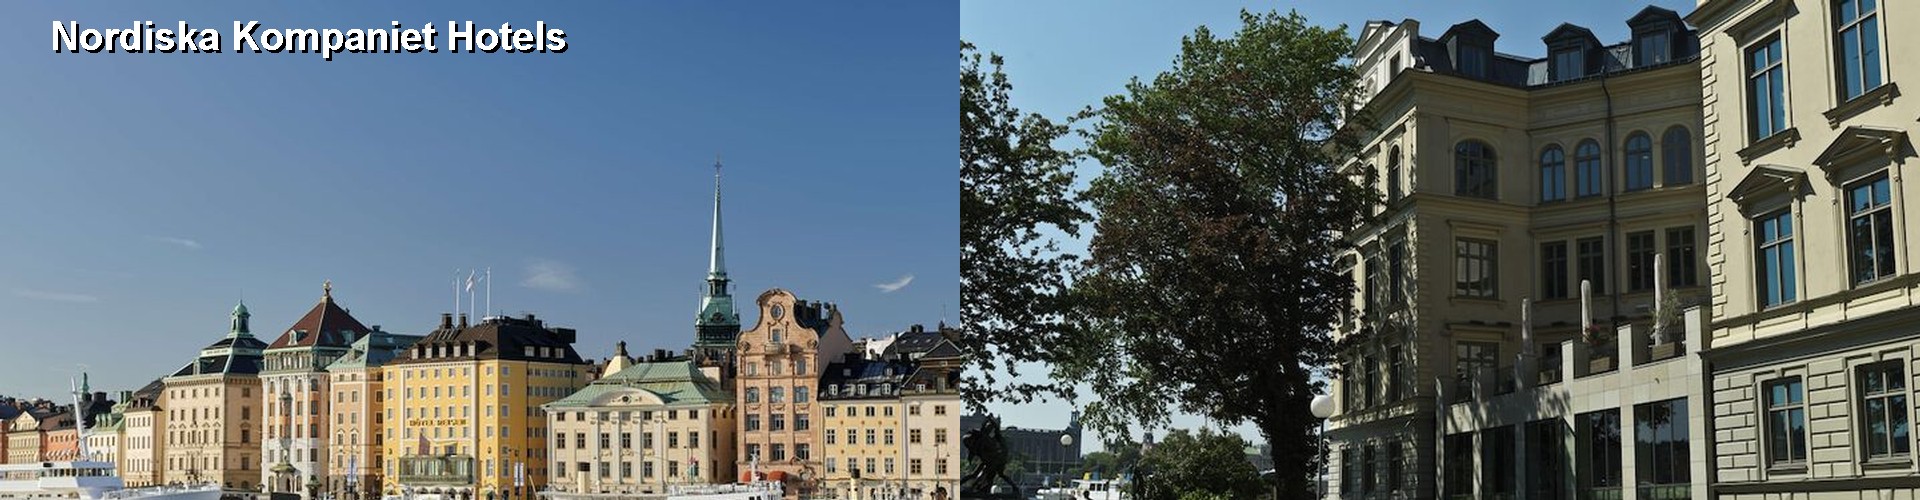 5 Best Hotels near Nordiska Kompaniet